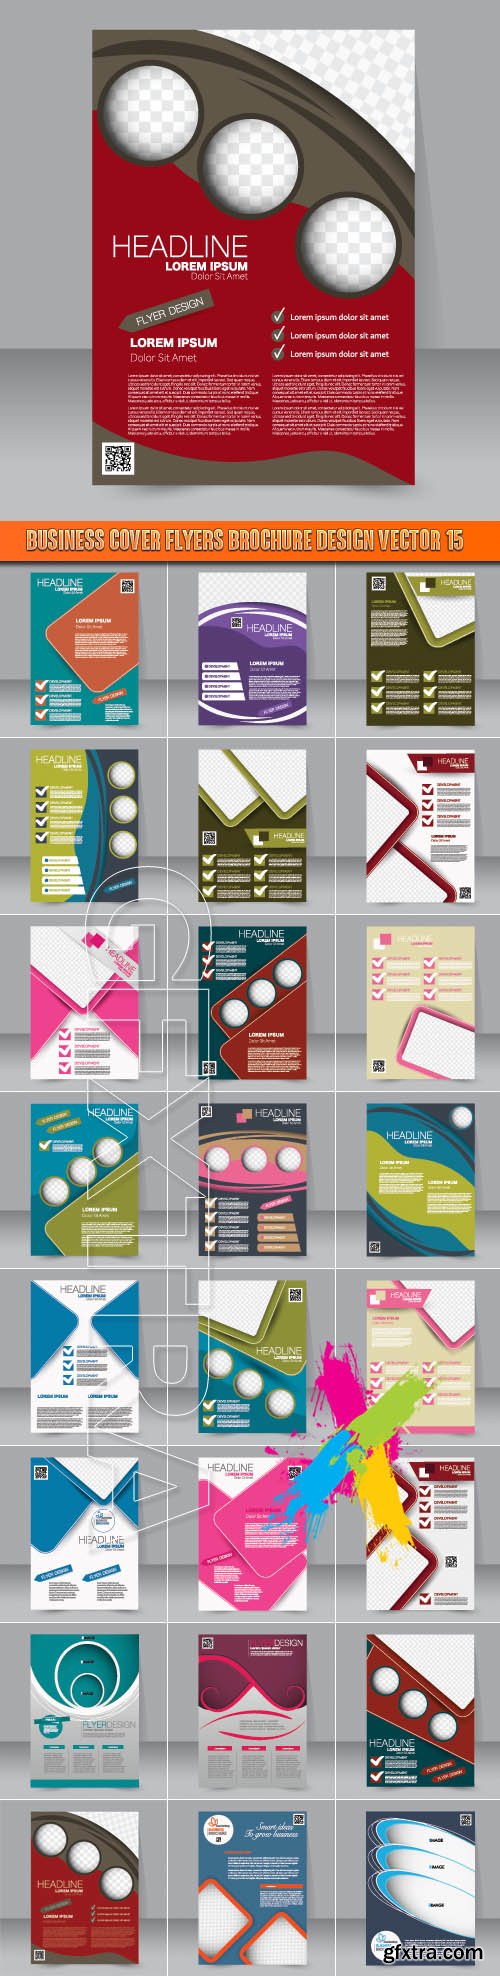 Business cover flyers brochure design vector 15